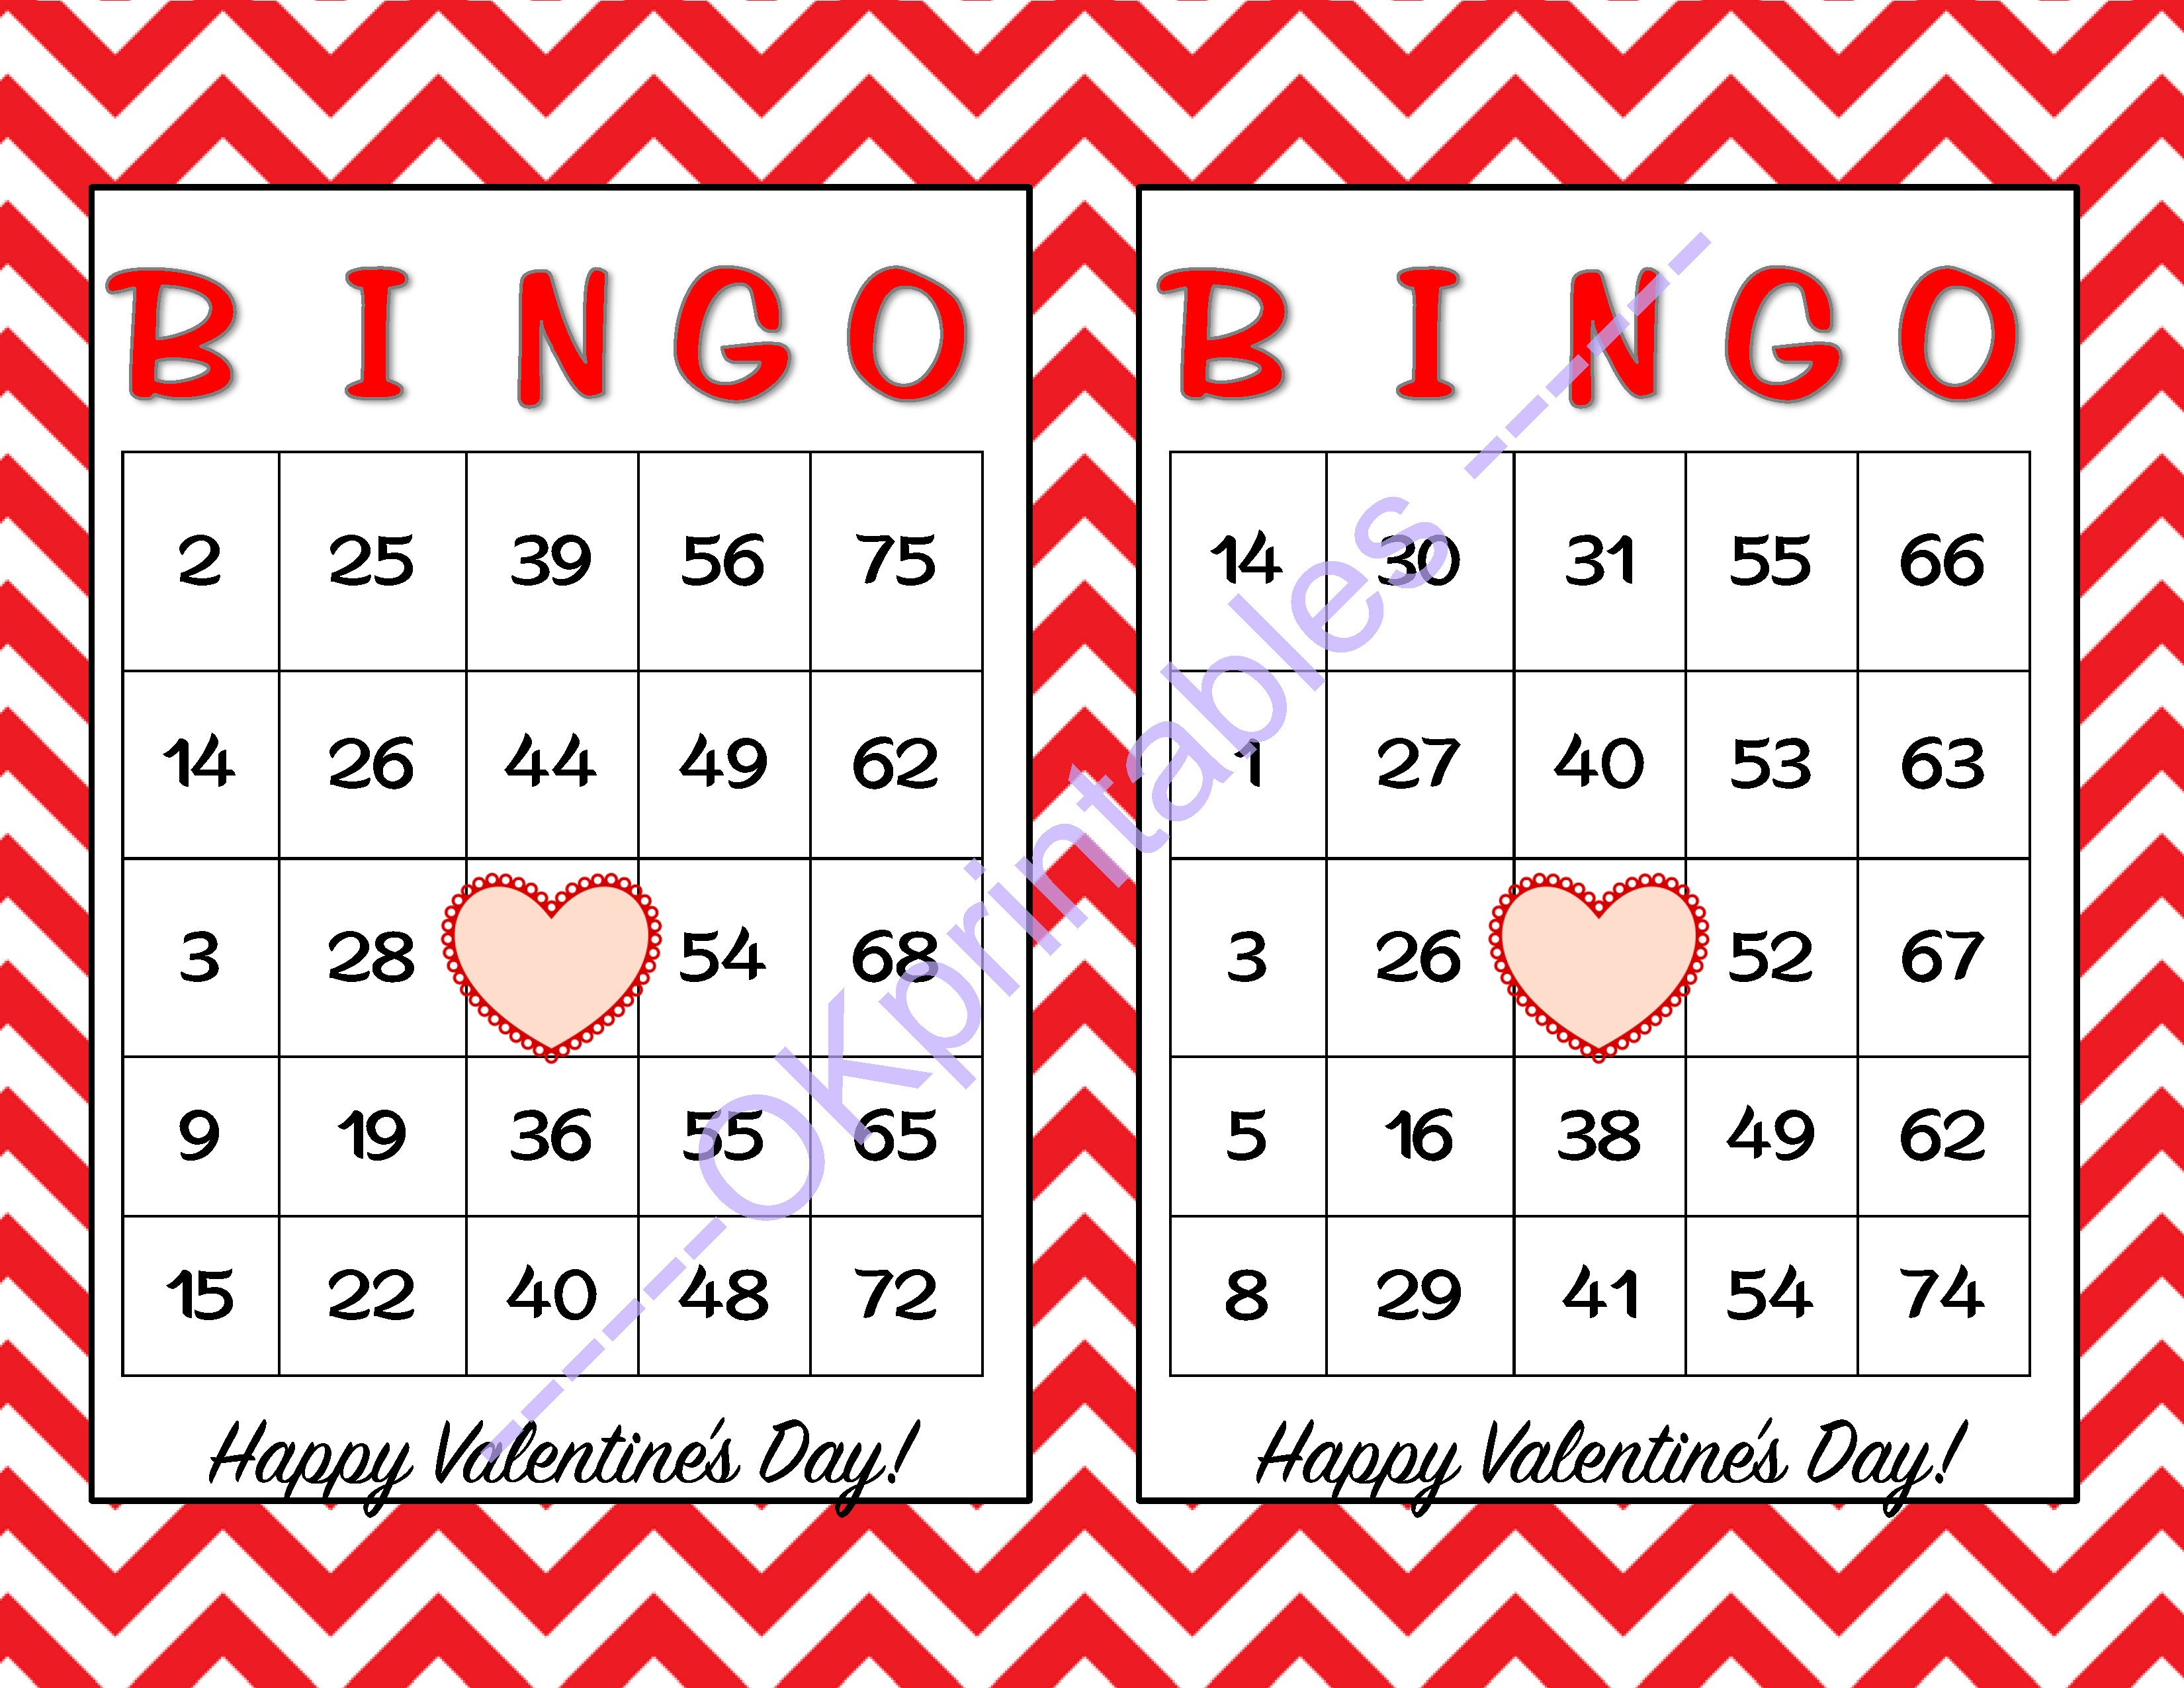 30 Happy Valentines Day Bingo Cards -Okprintables On Zibbet - Free - Free Printable Bingo Cards Random Numbers